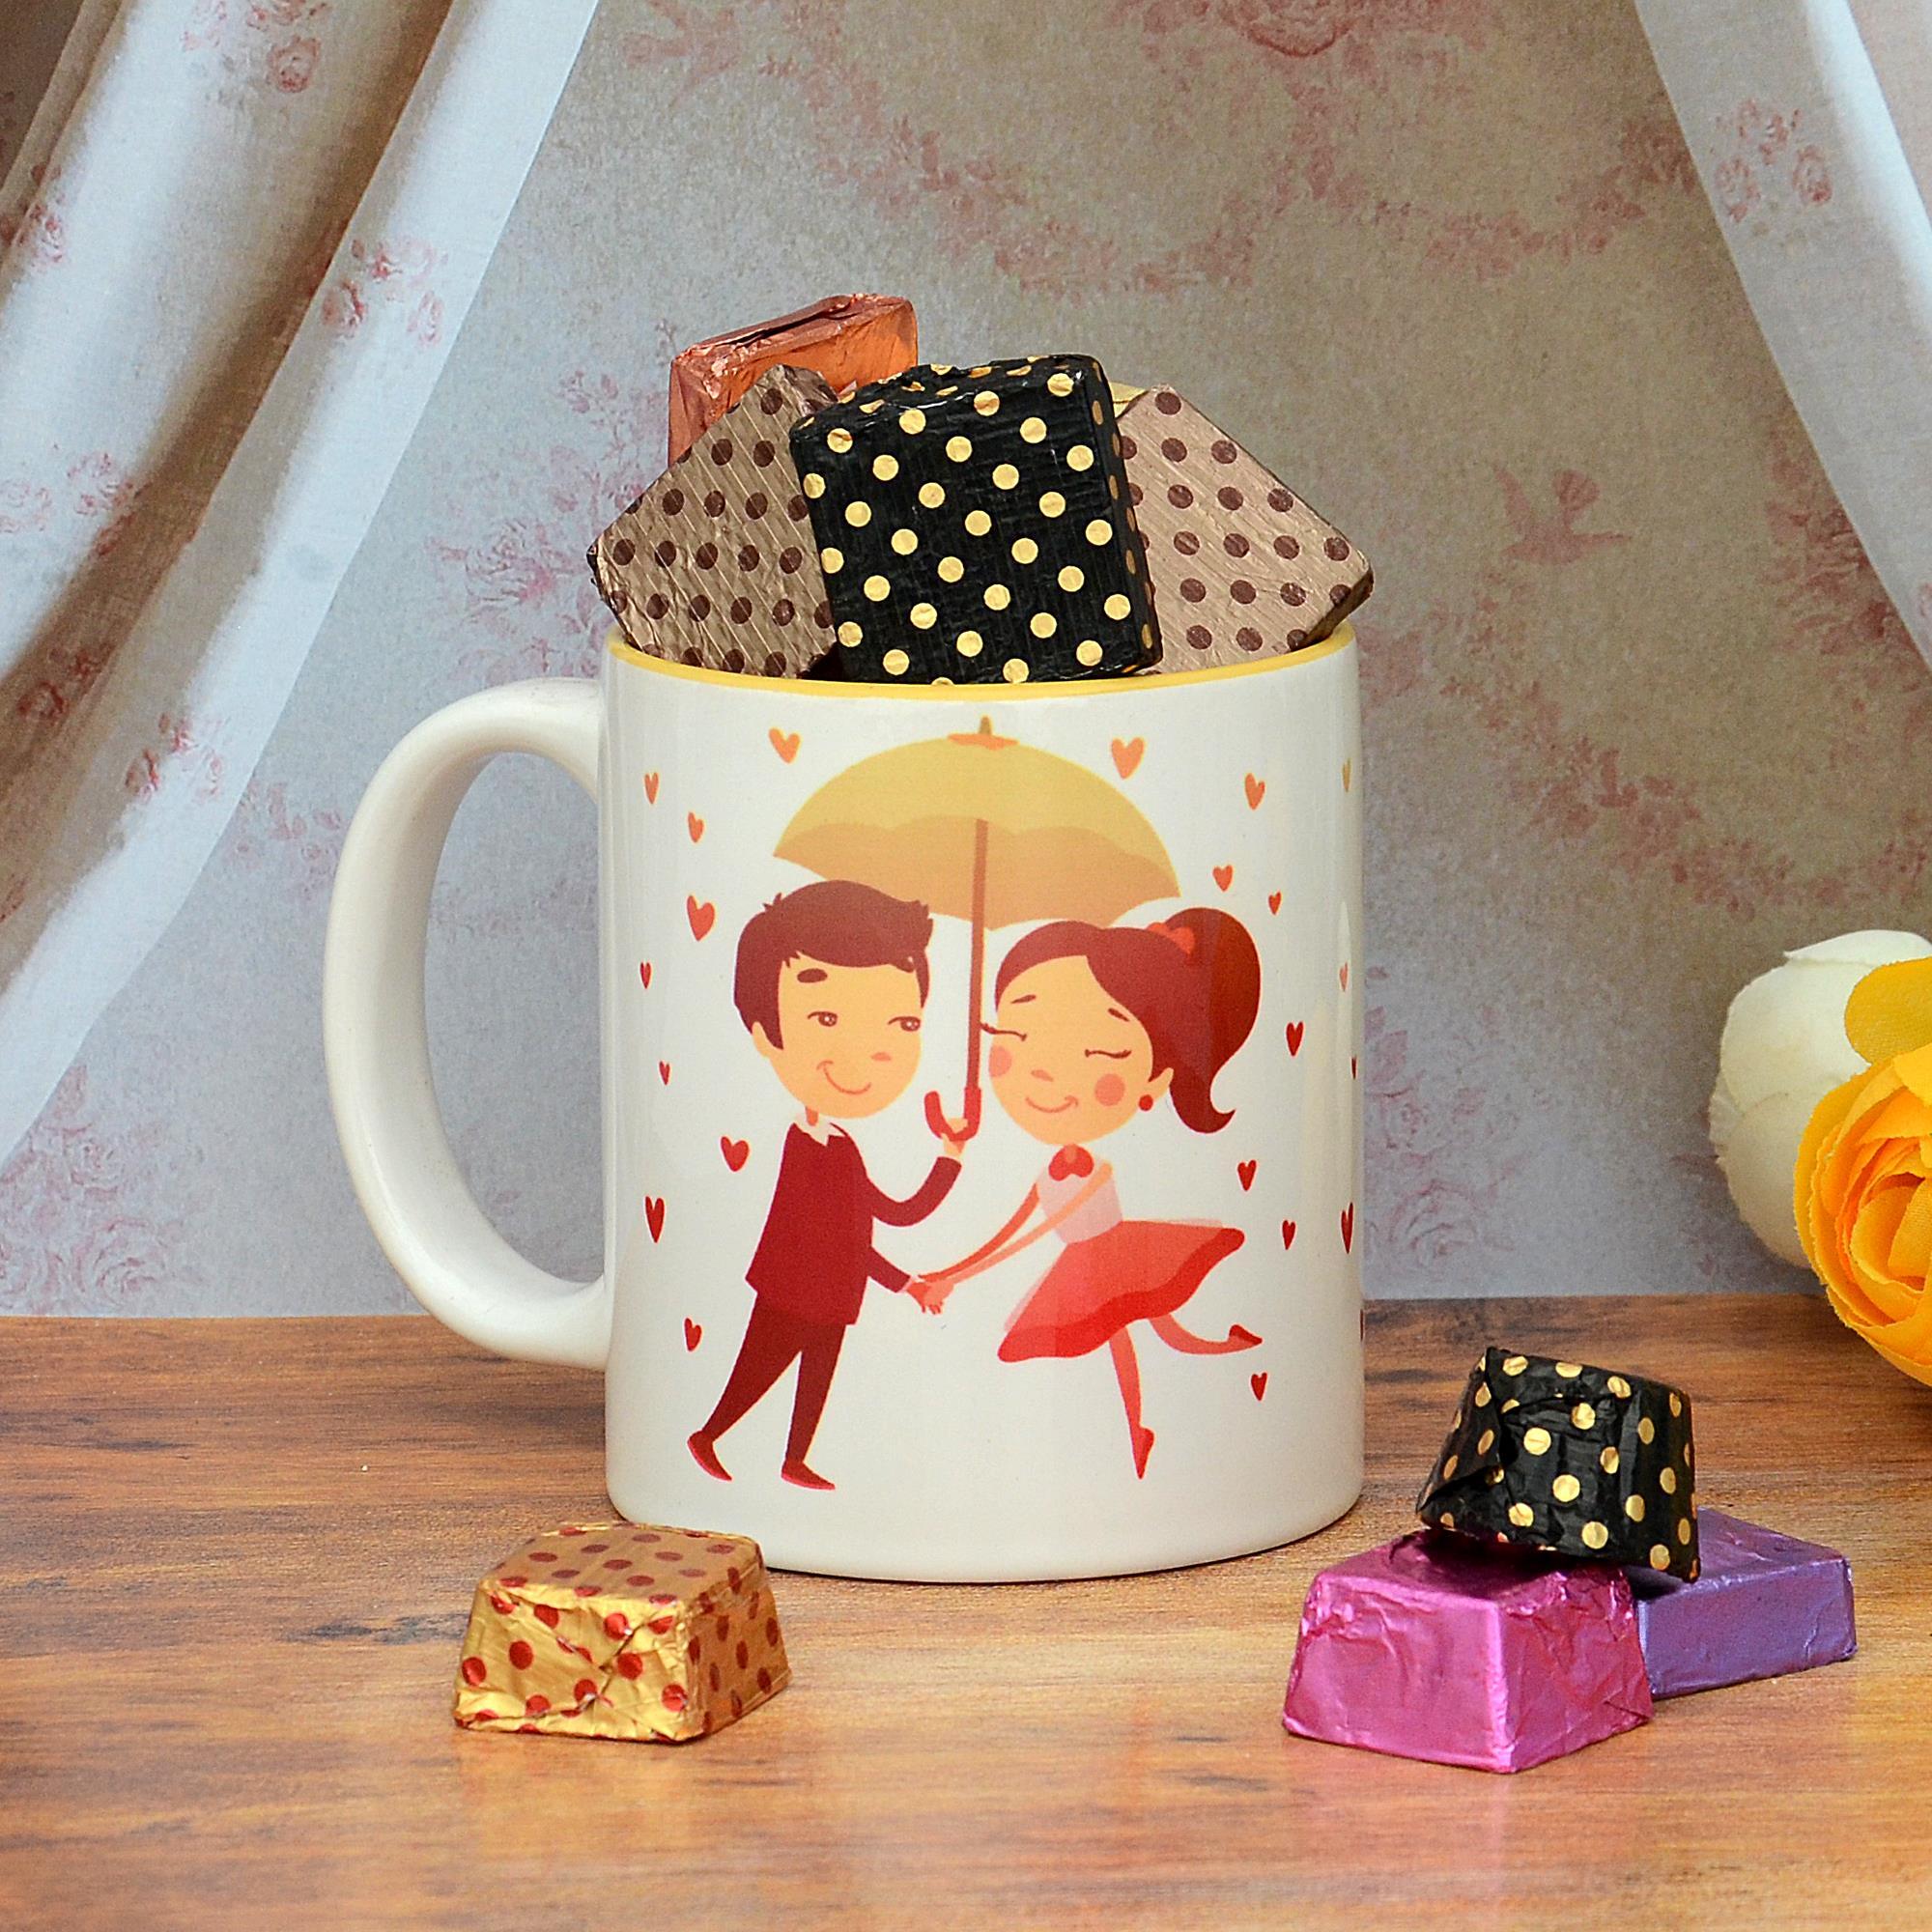 Handmade Chocolates in a Mug